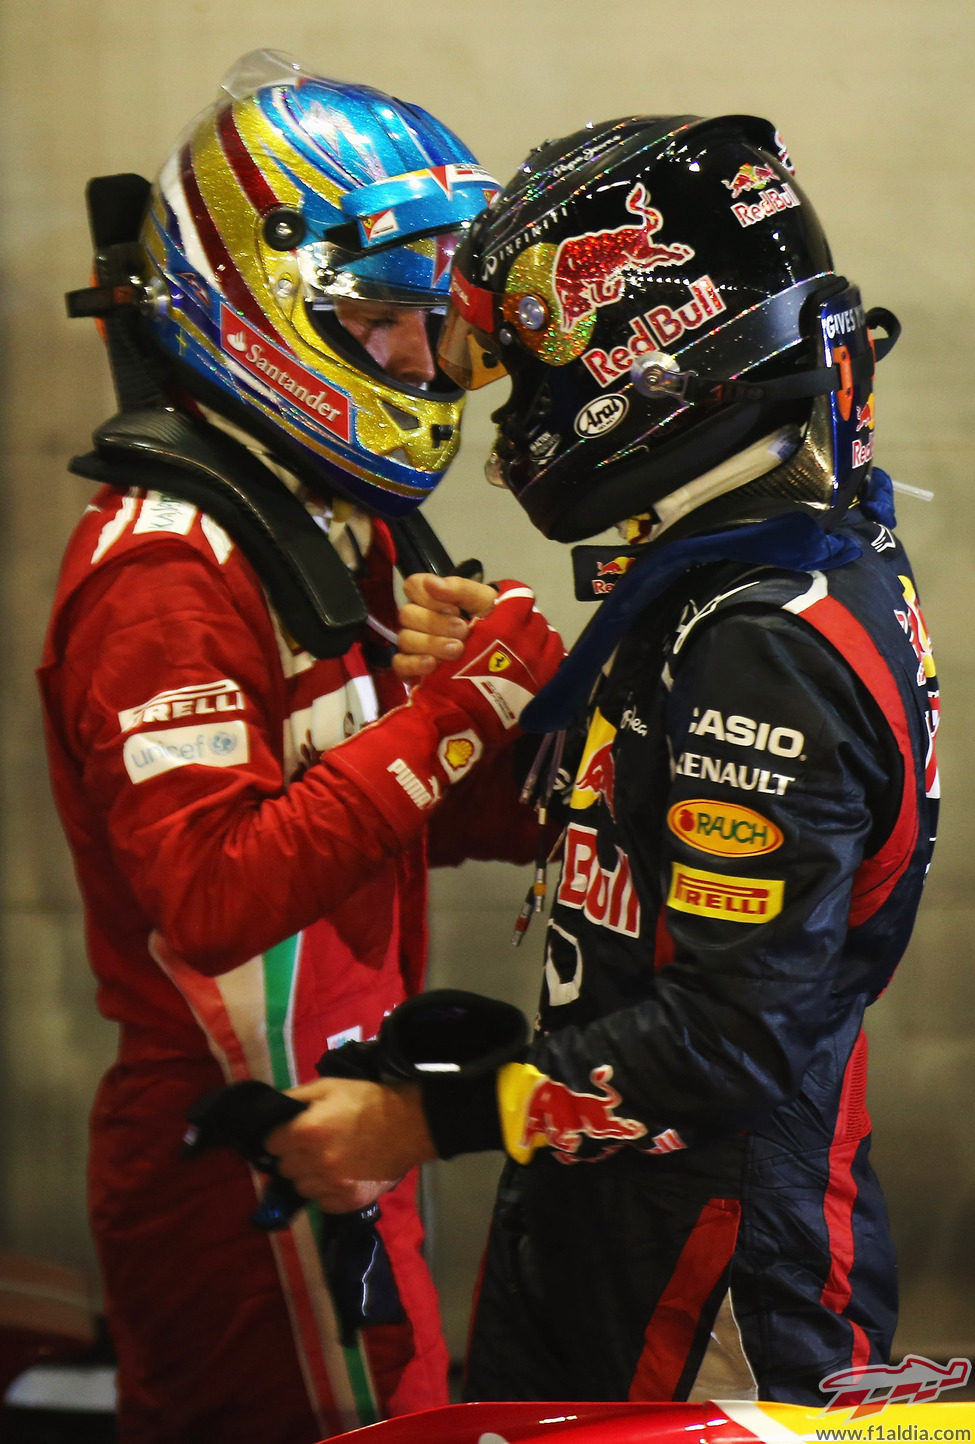 Fernando Alonso y Sebastian Vettel se felicitan tras la carrera